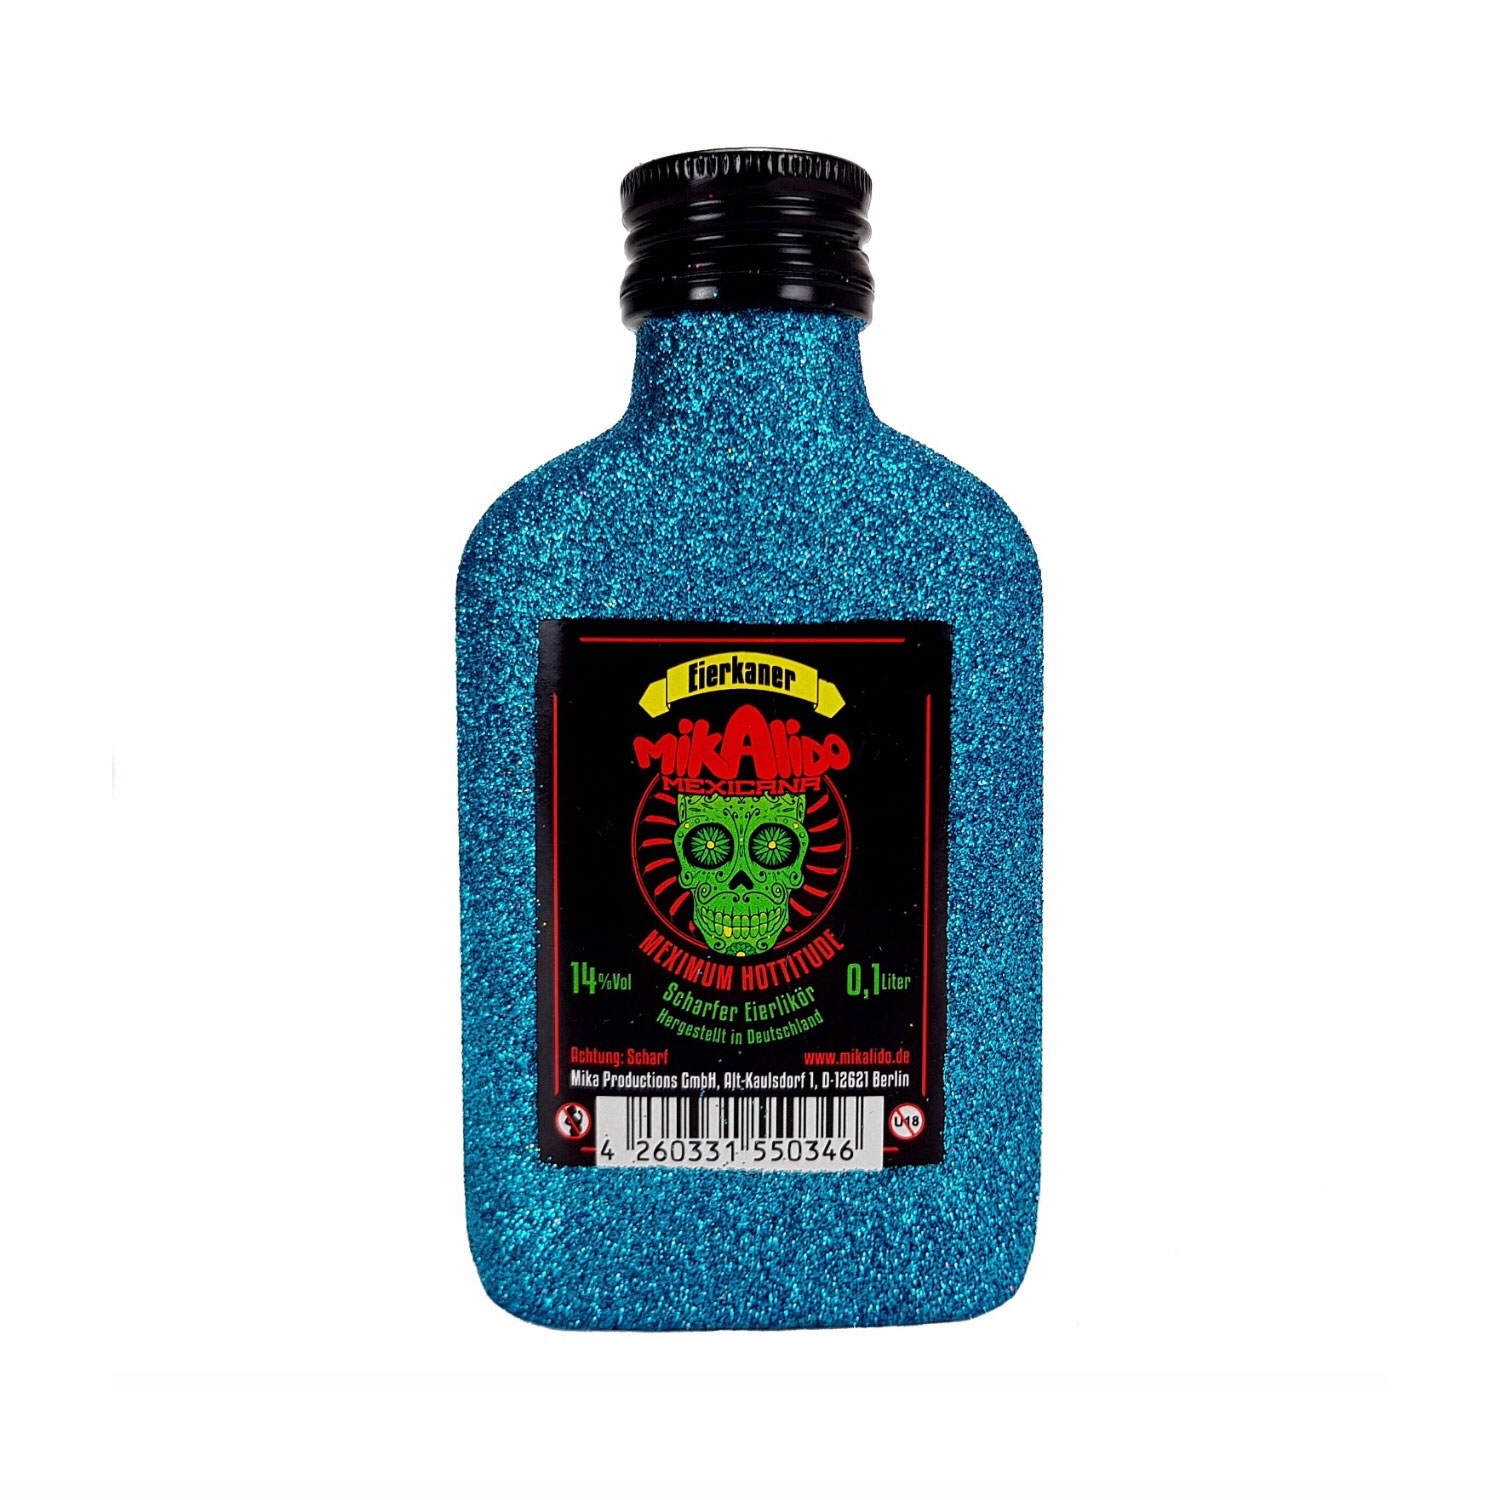 Mikalido Mexicana Eierkaner Scharfer Eierlikör 0,1l (14% Vol) Blin Bling Glitzerflasche in blau -[Enthält Sulfite]